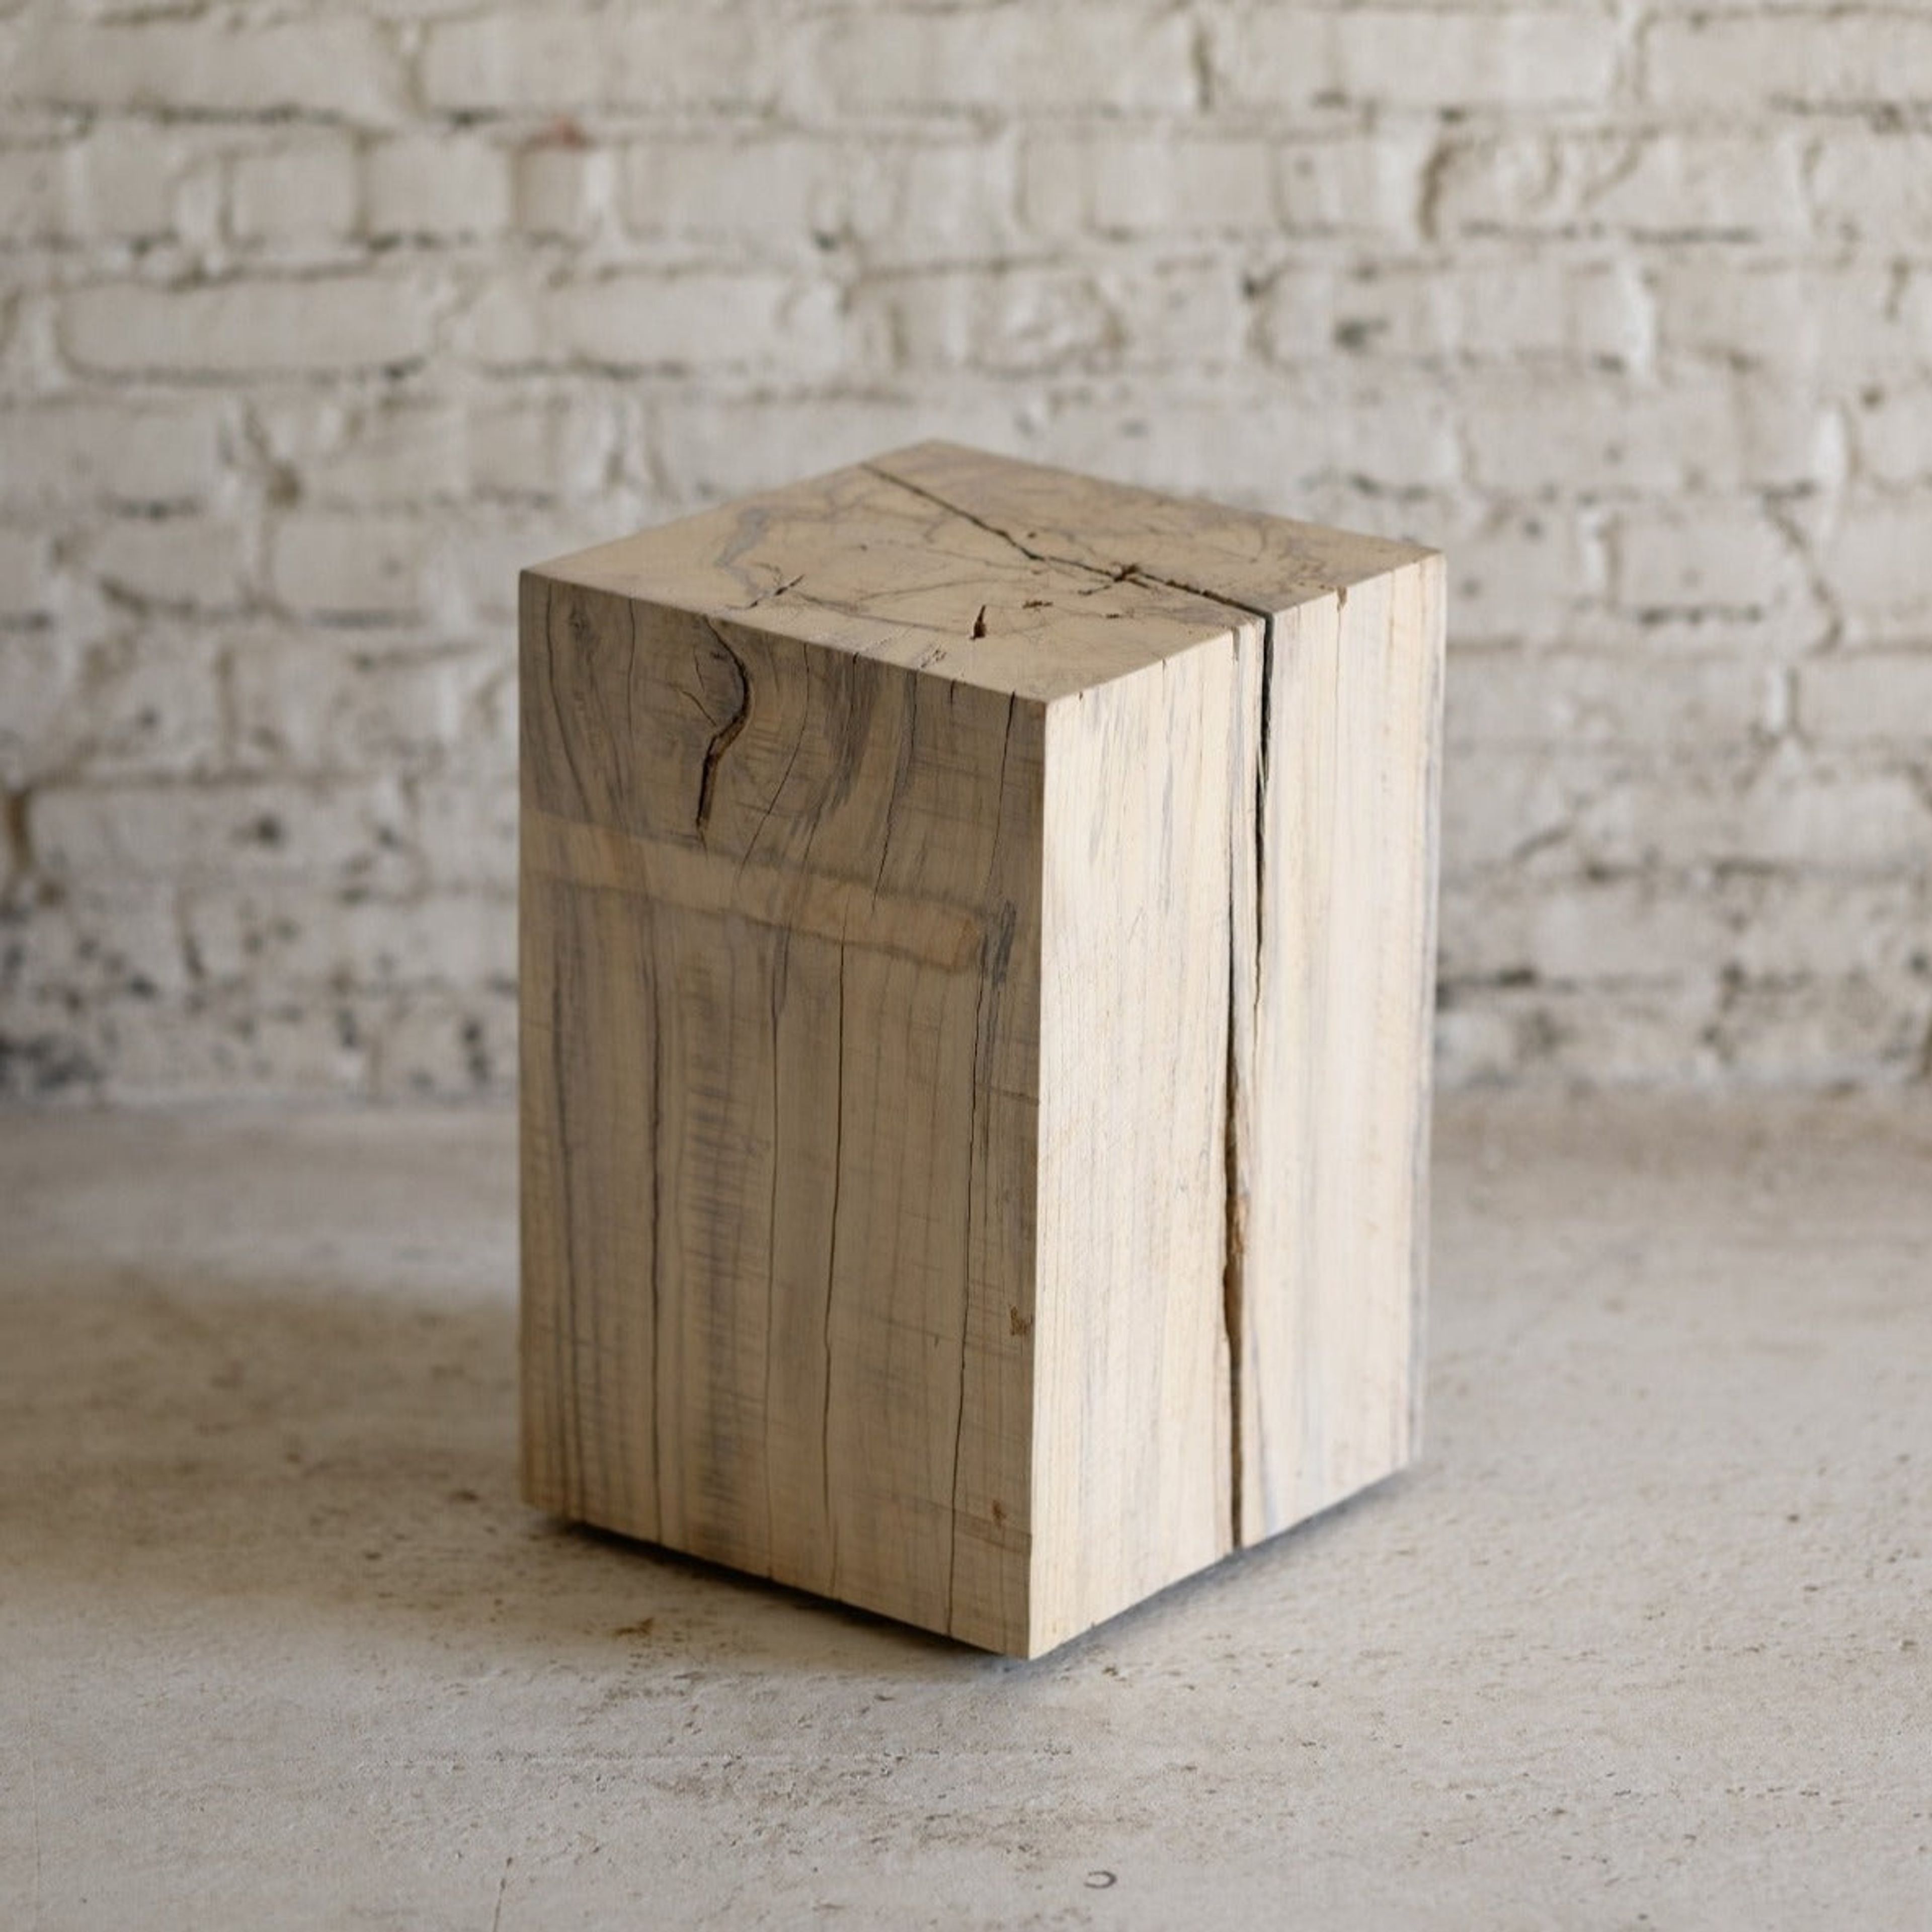 Le Boit | Solid Wood Cube Pedestal, Art Display, Side Table, Plinths